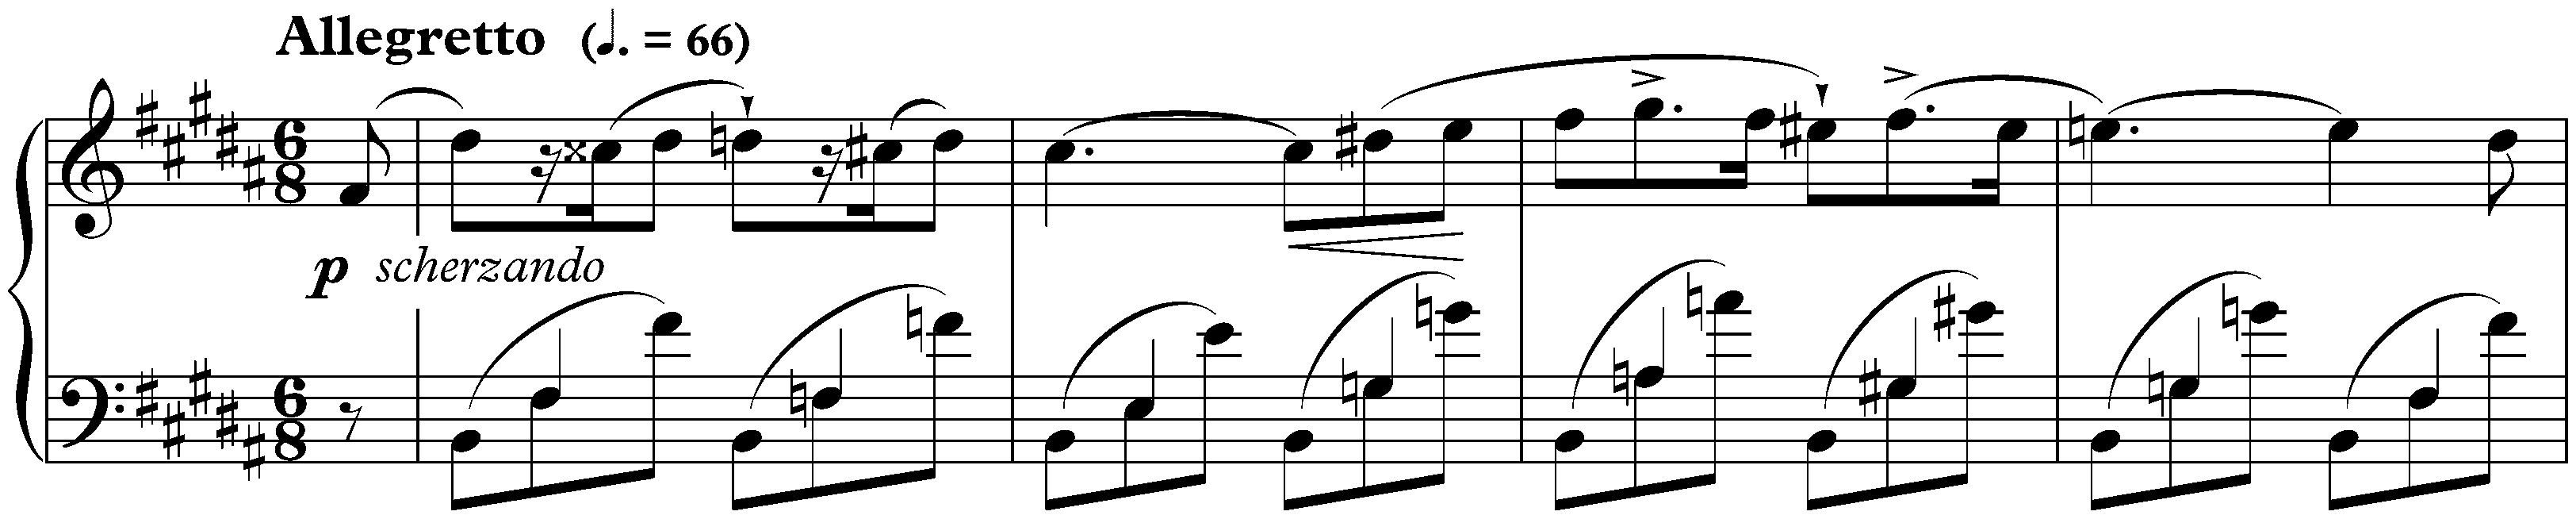 Three Nocturnes, op. 9; 3. B major